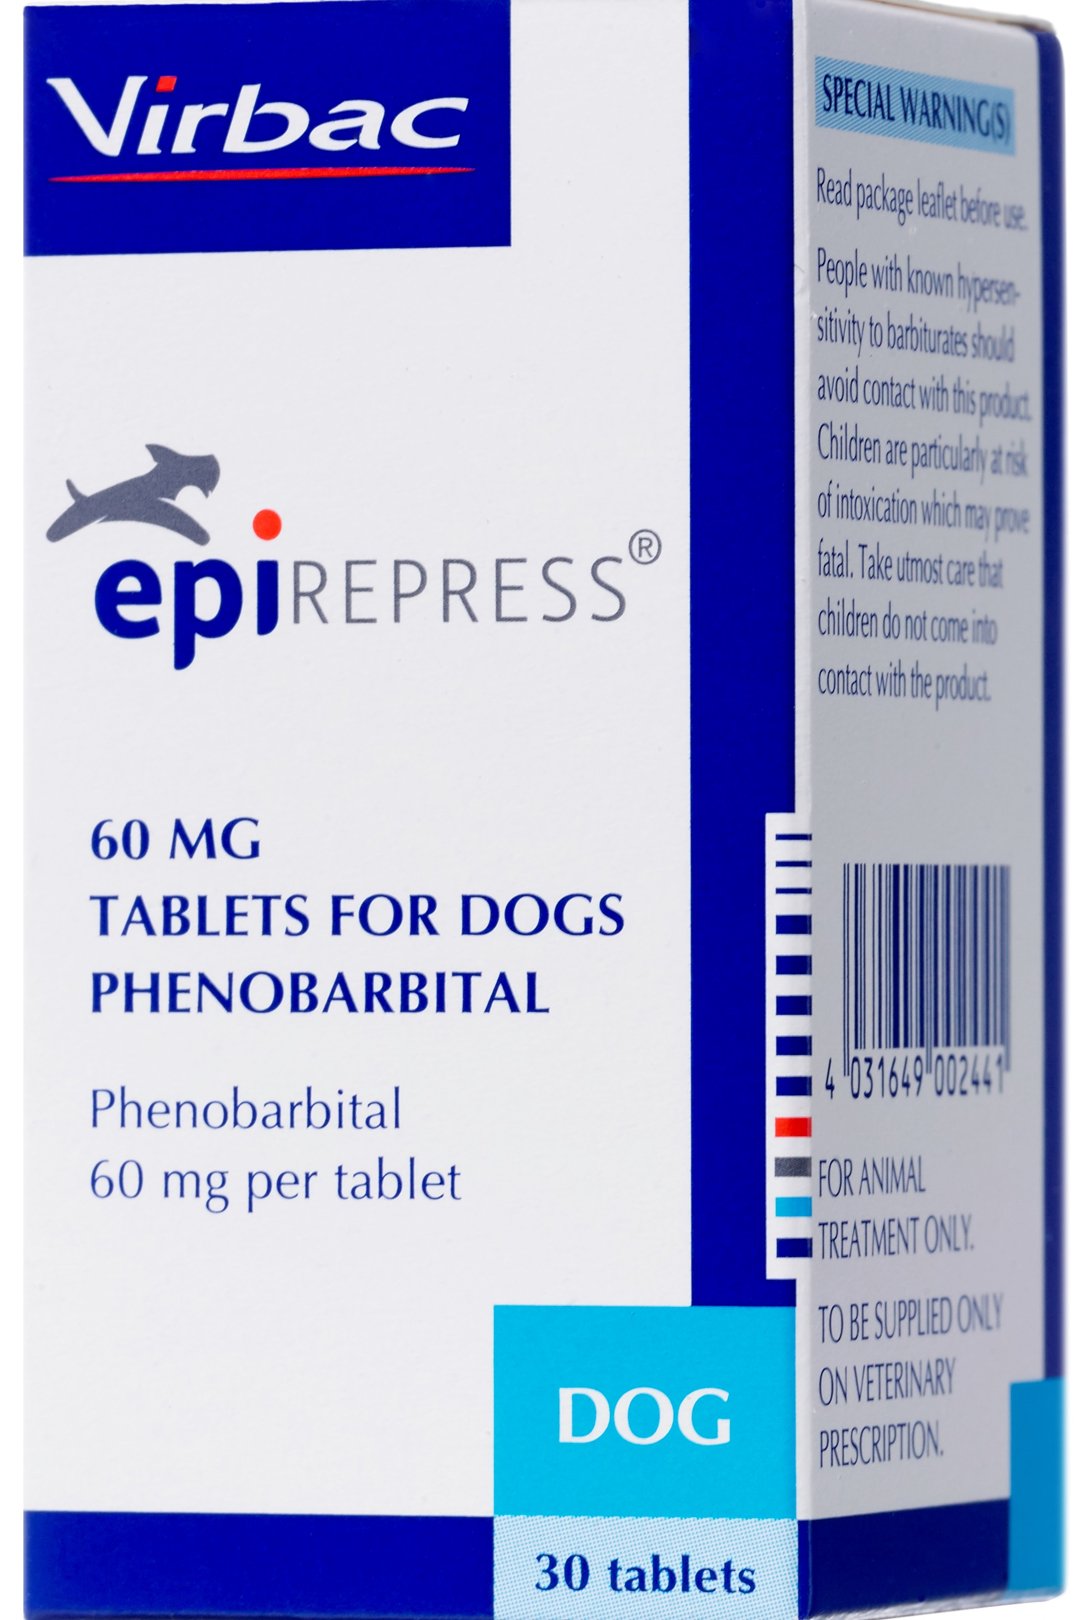 Phenobarbital is used to treat or prevent seizures